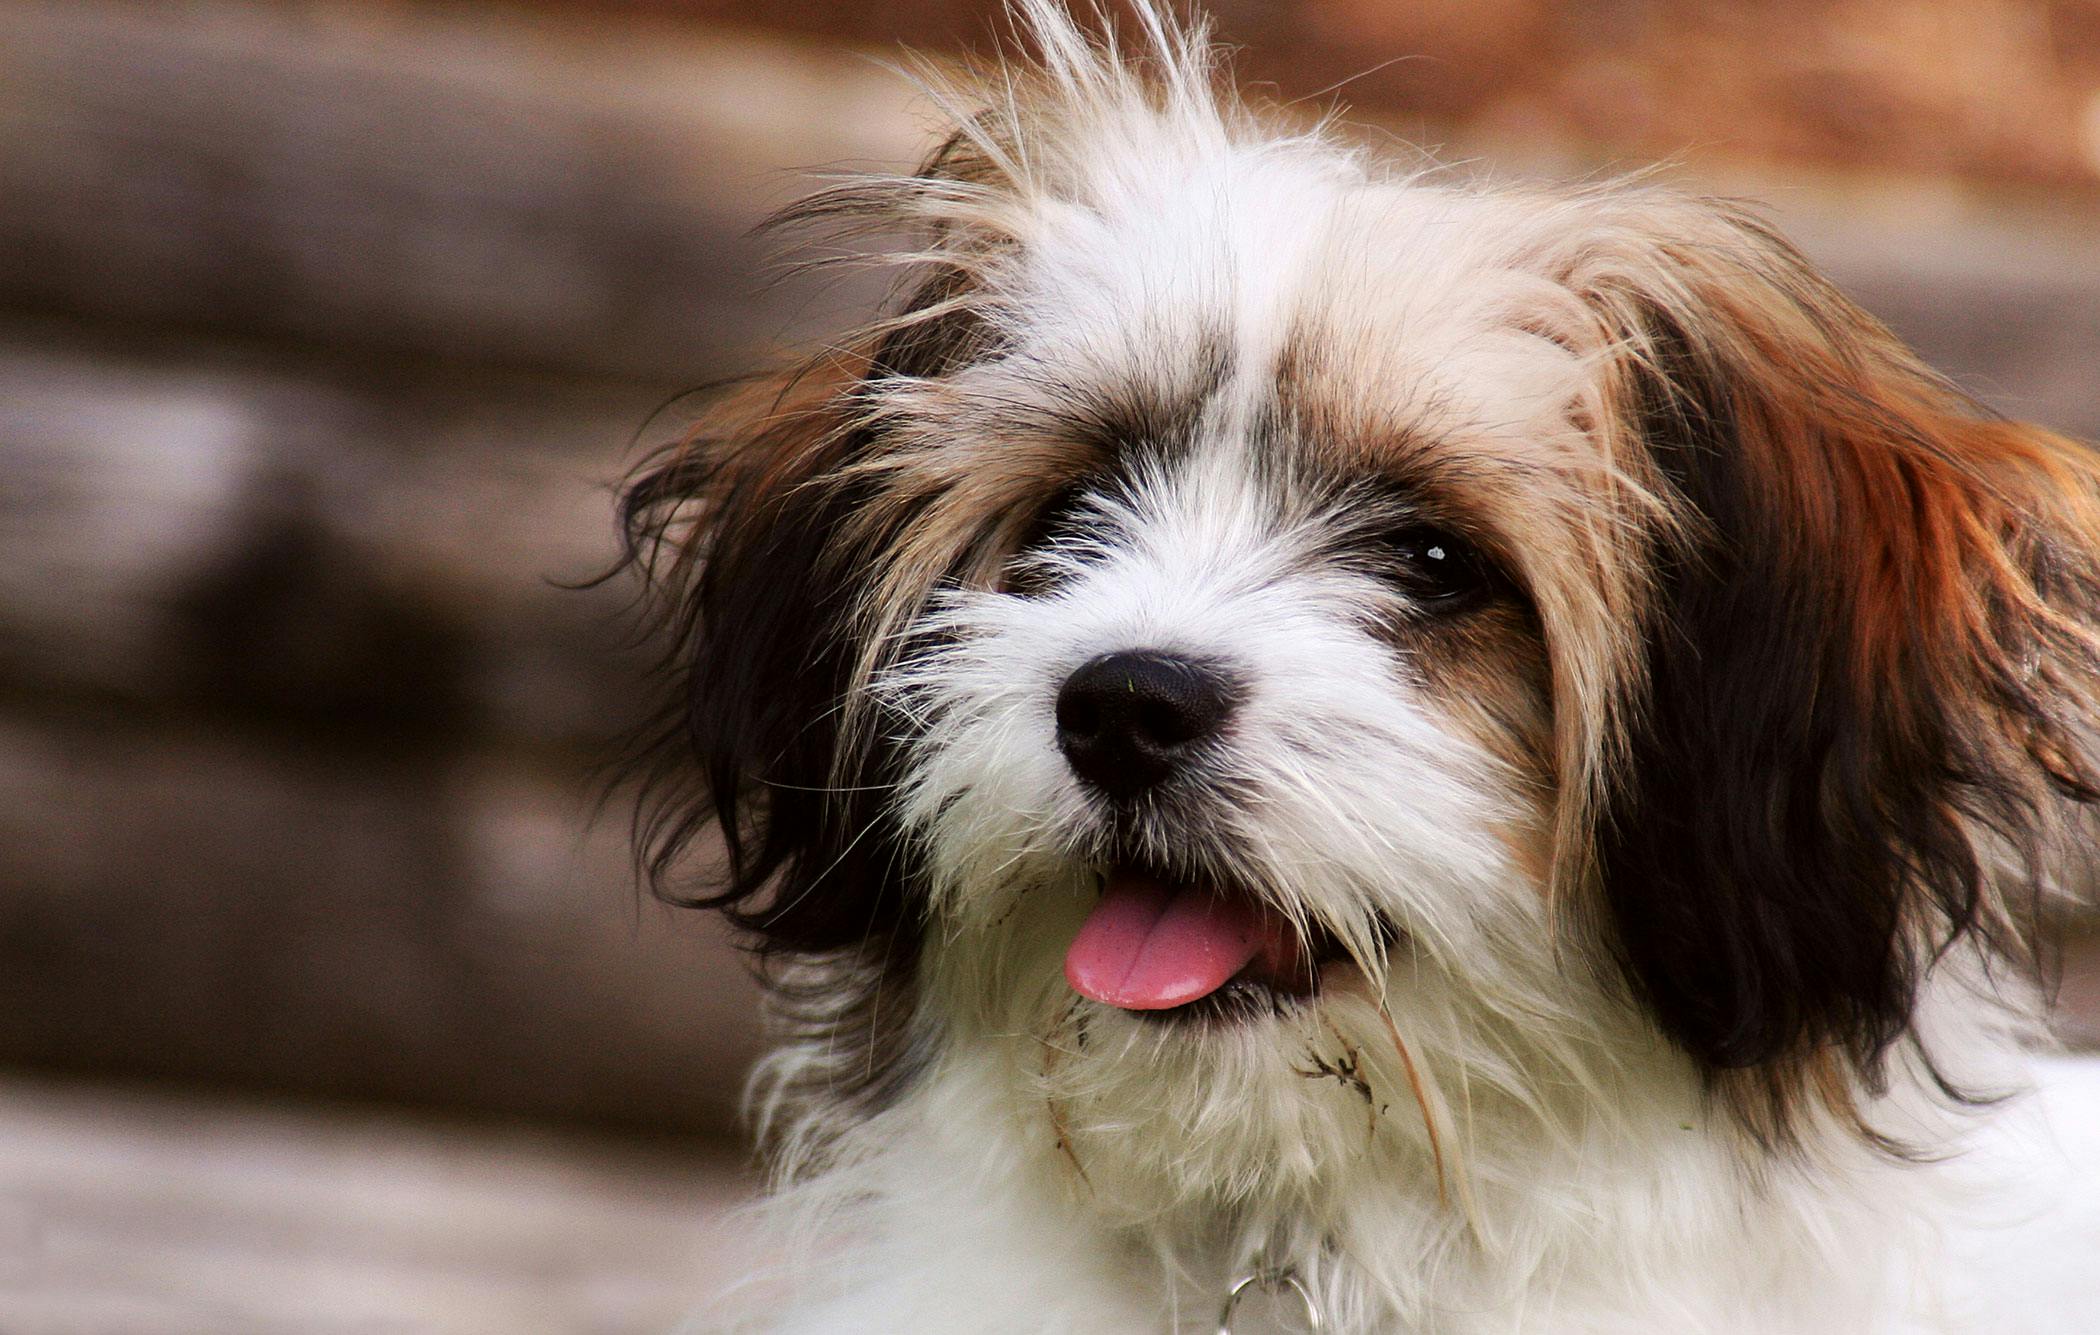 can benadryl cause seizures in dogs